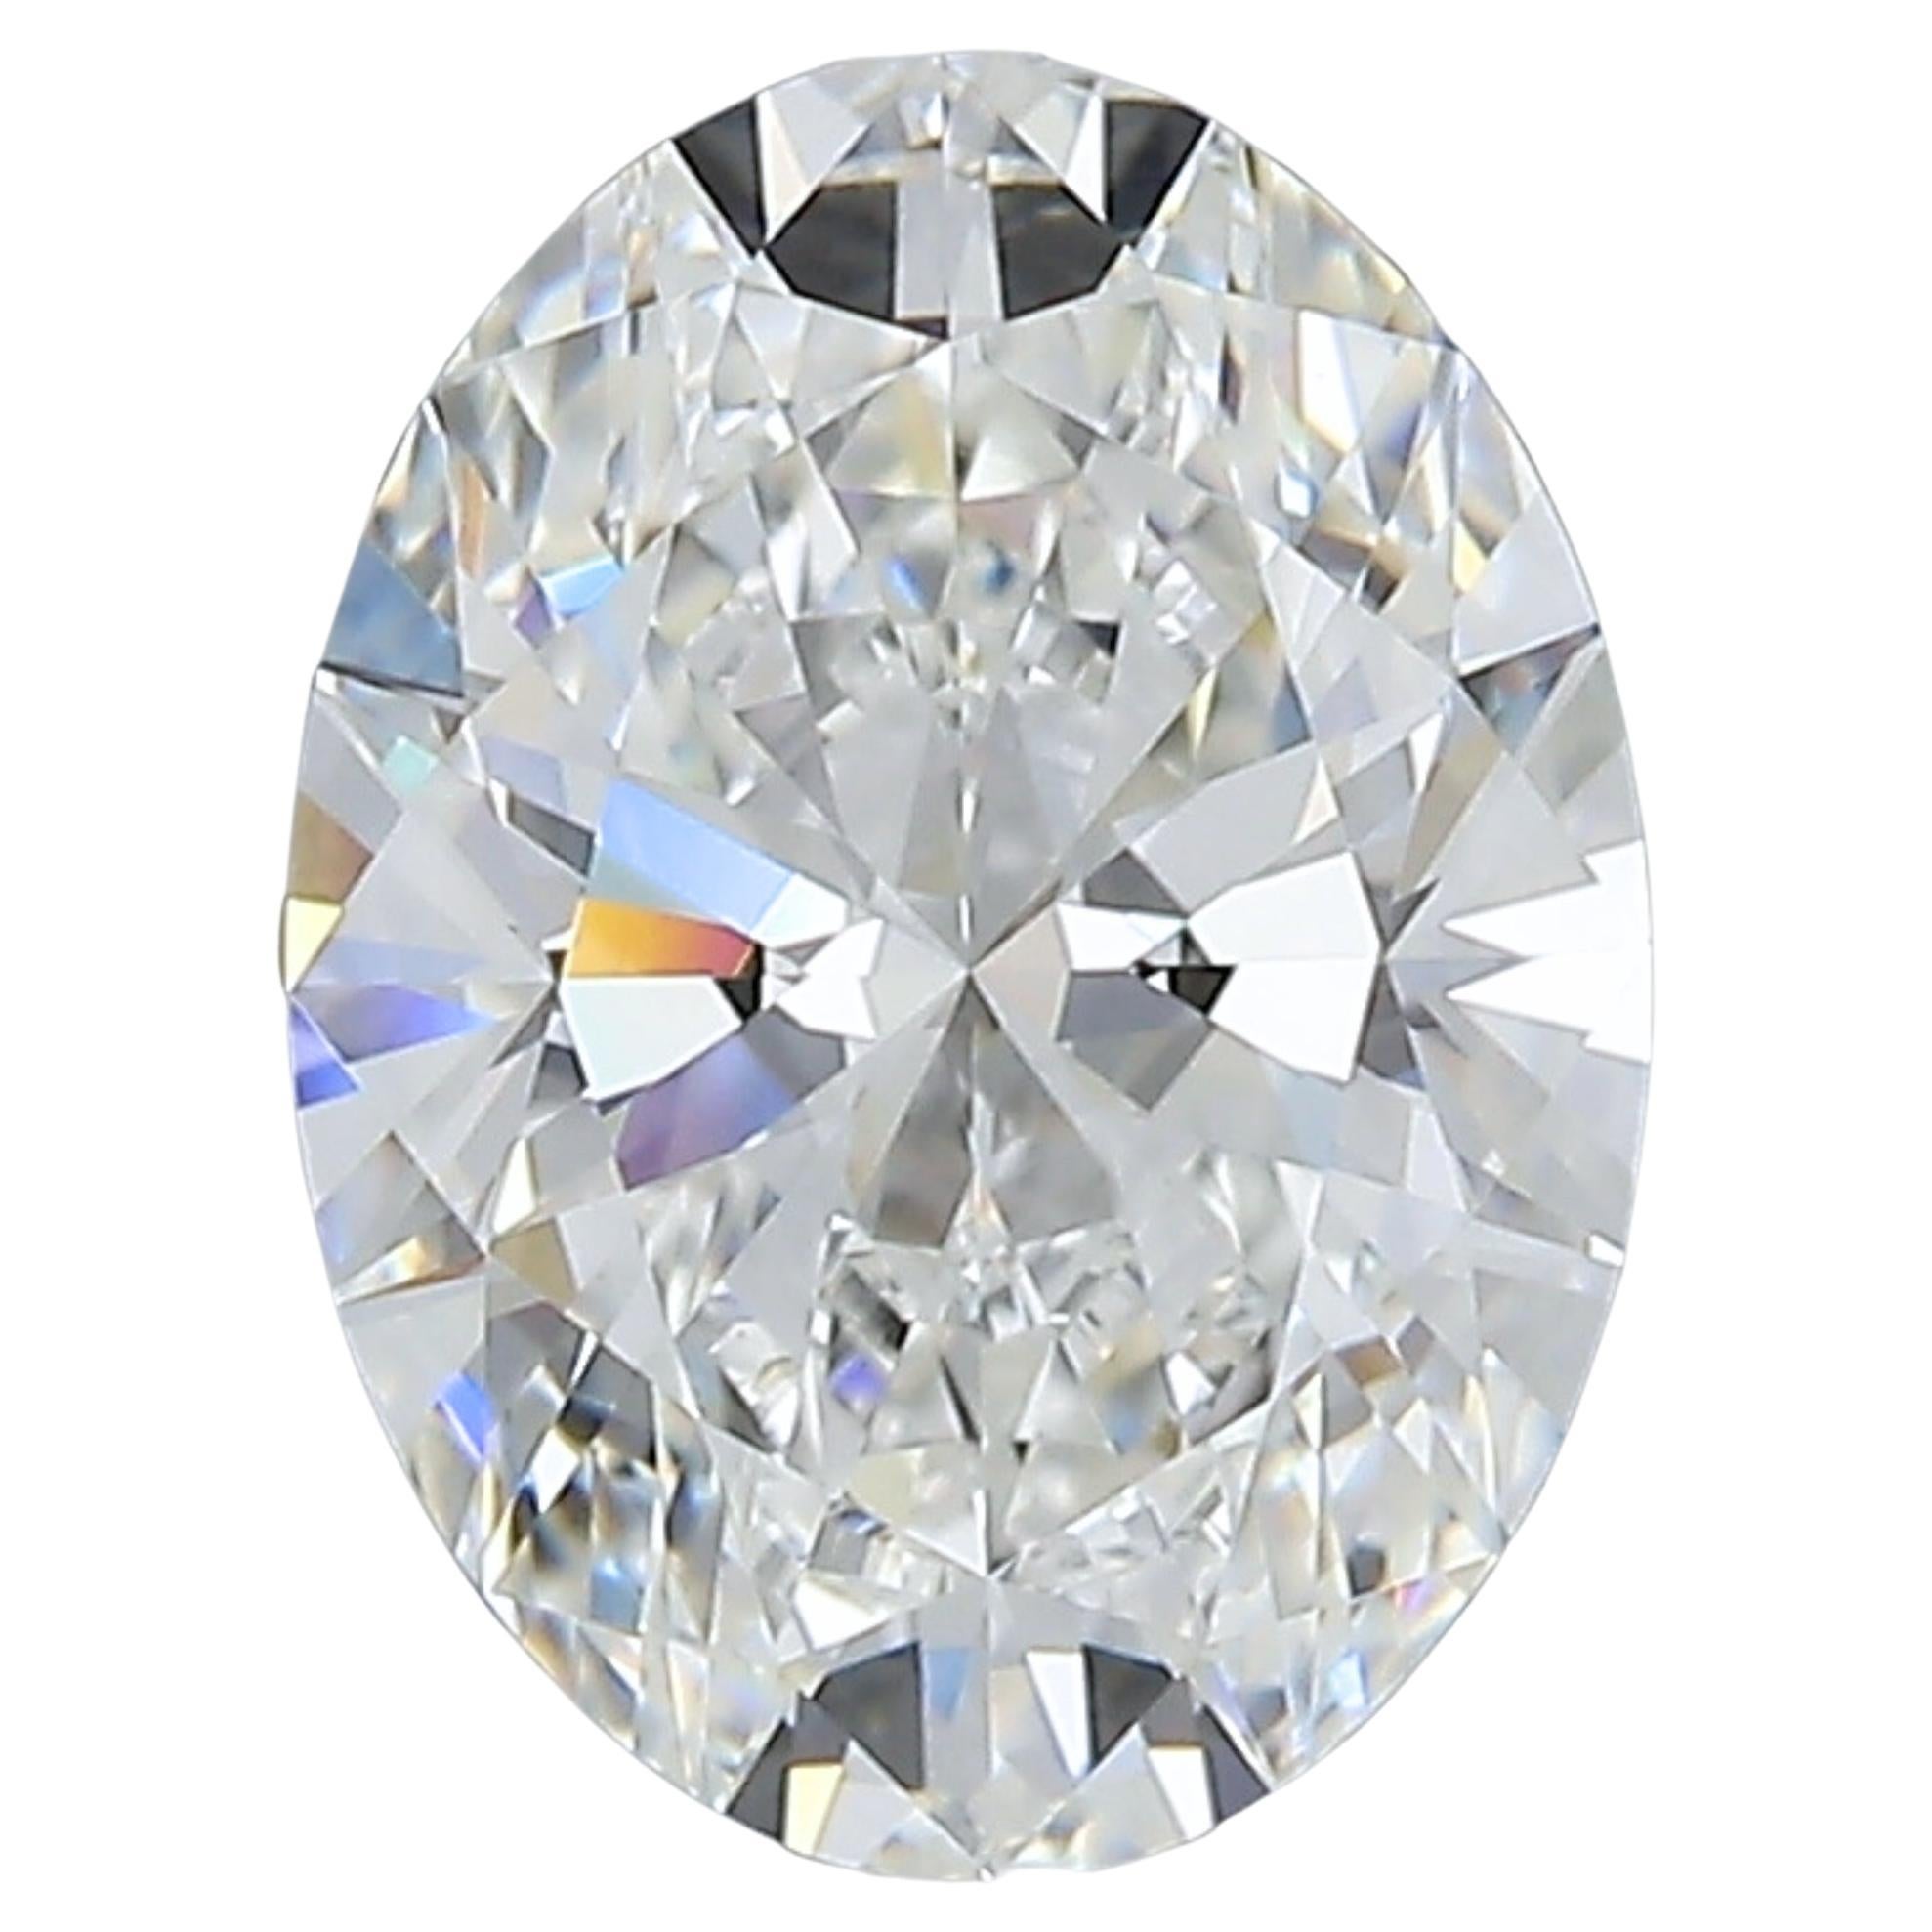 1pc Pretty Natural cut Oval diamond in a 1.73 carat For Sale